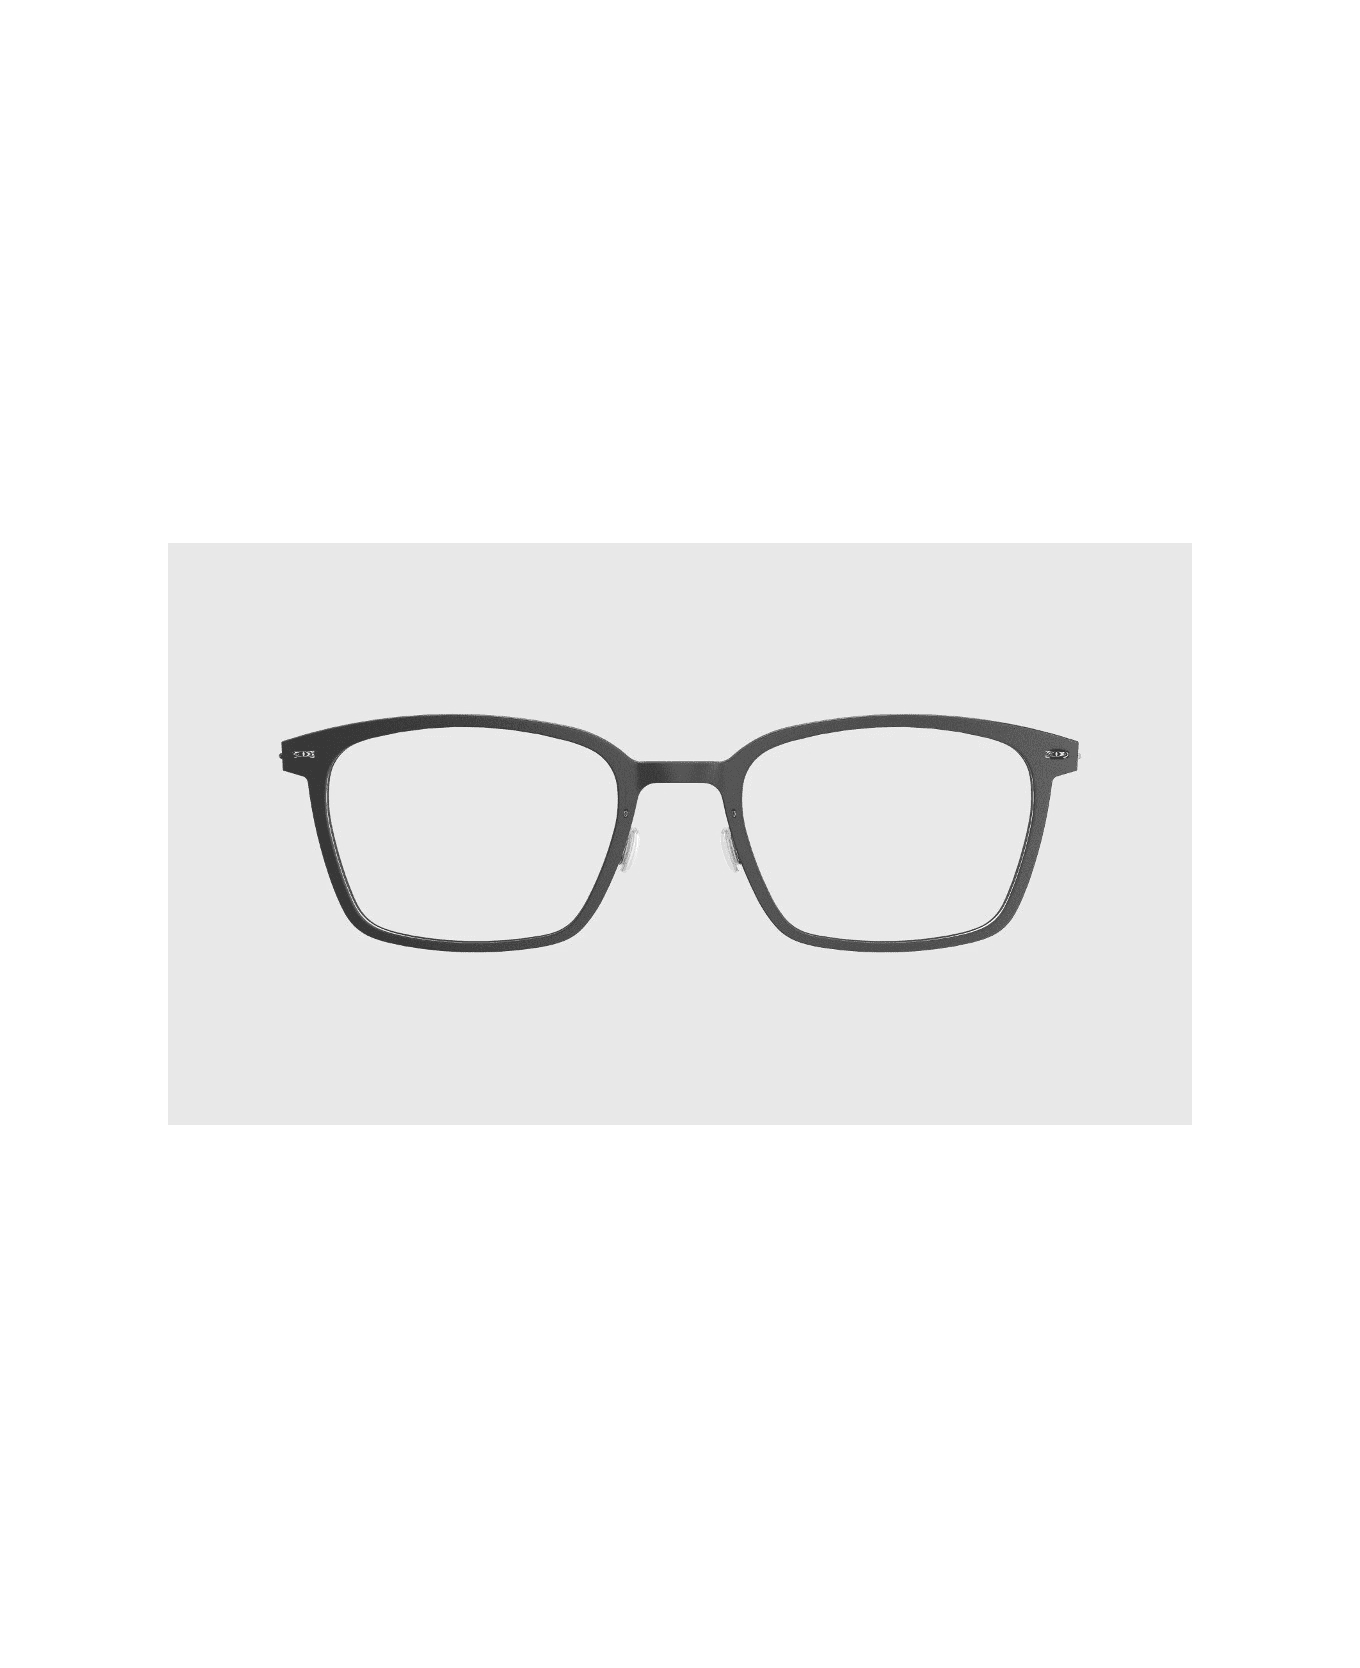 LINDBERG Now 6536 17 51 Glasses - Nero アイウェア